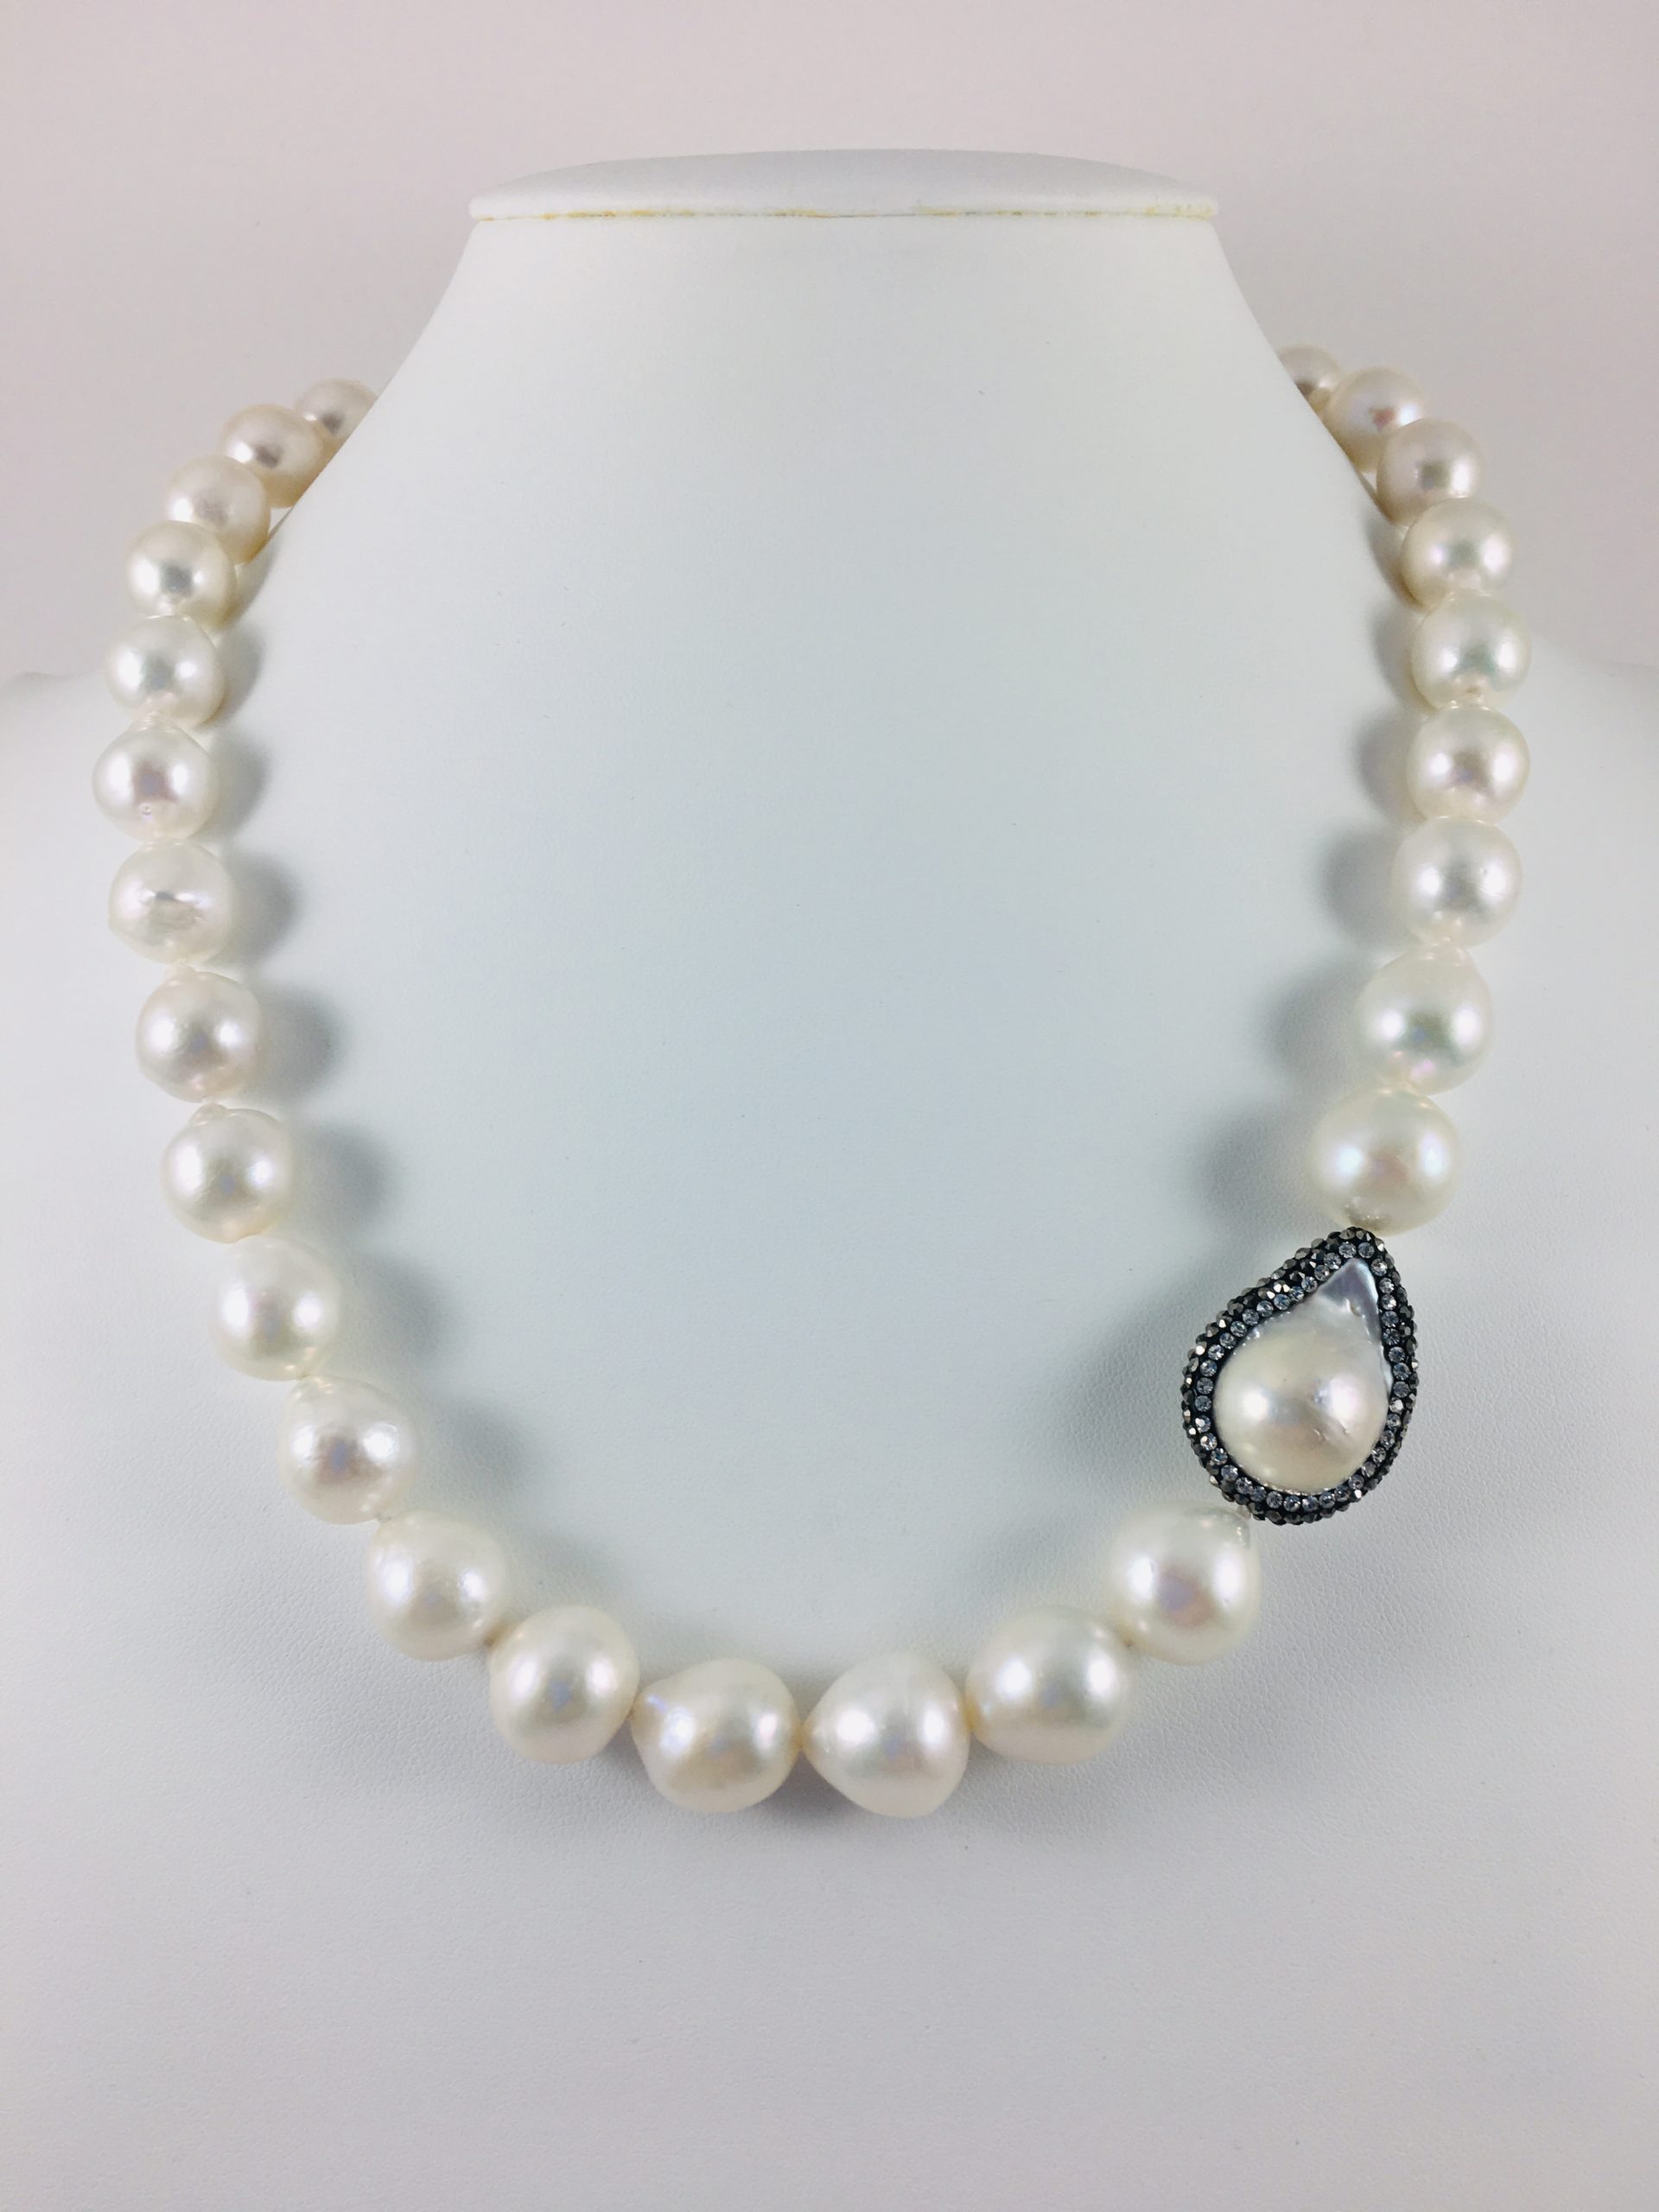 Silver Baroque Pearl Necklace with Zircon Stone